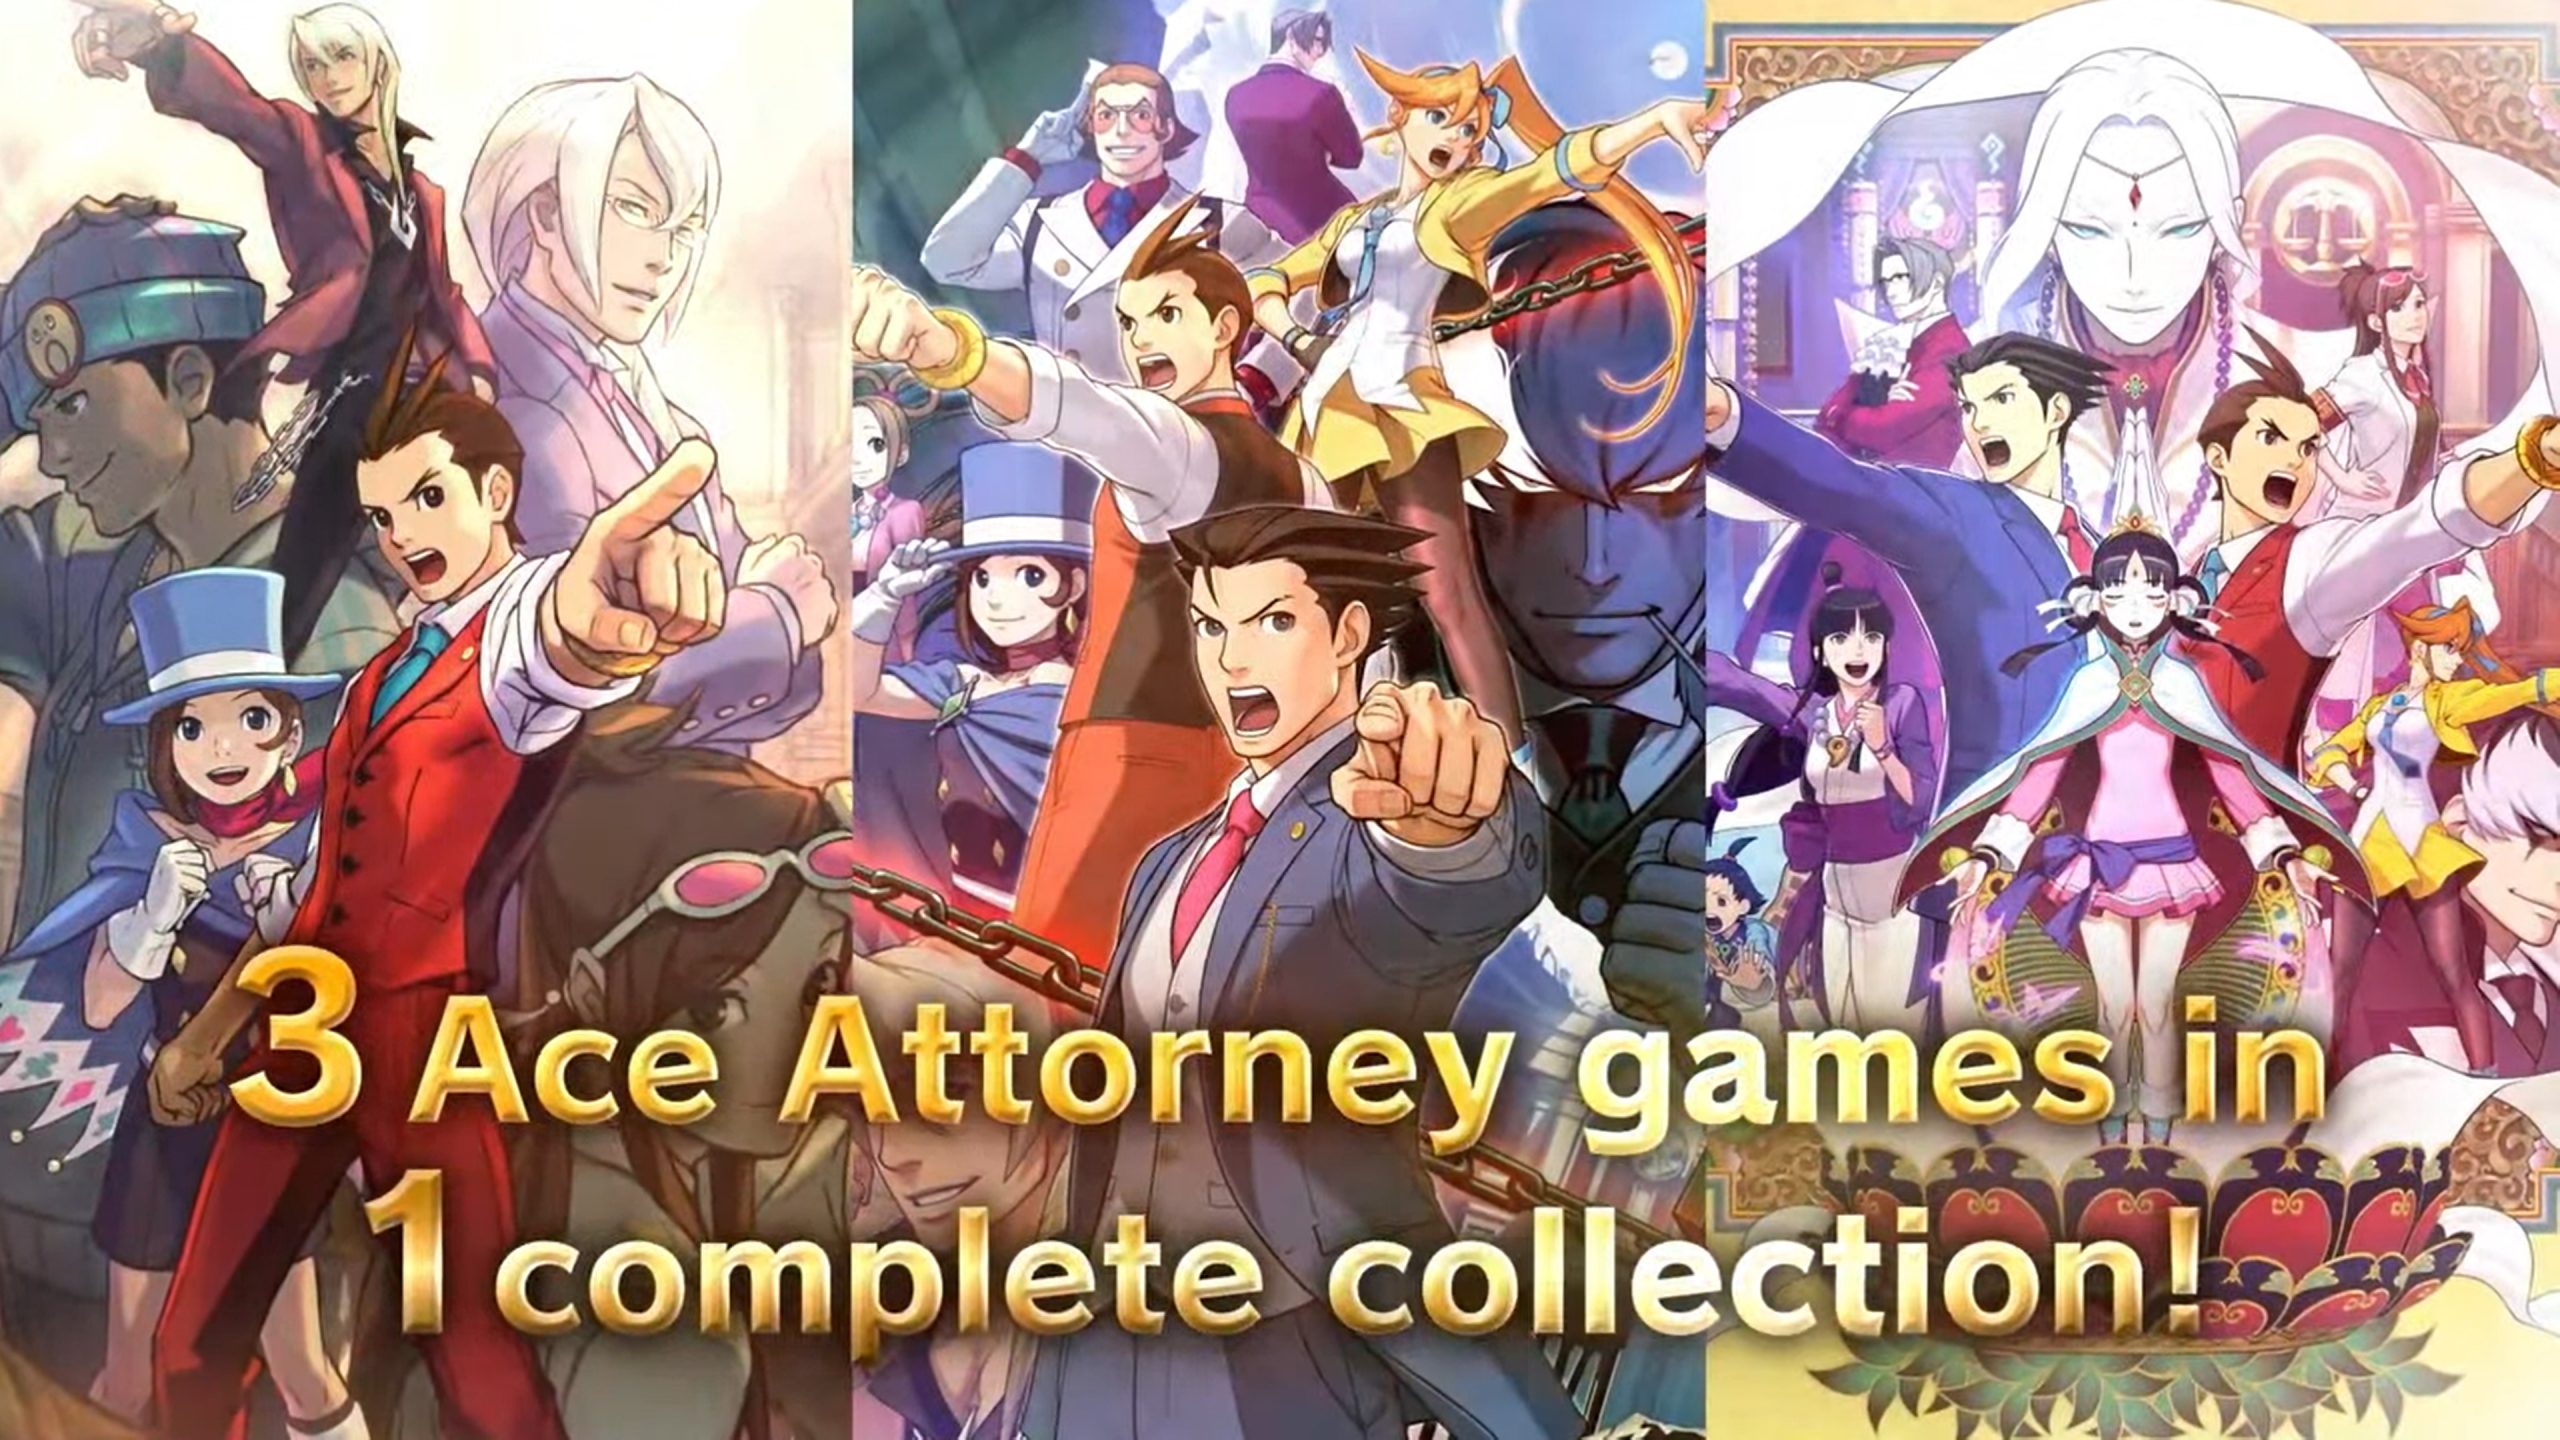 Apollo Justice: Ace Attorney Trilogy (Switch) promete reviver mais